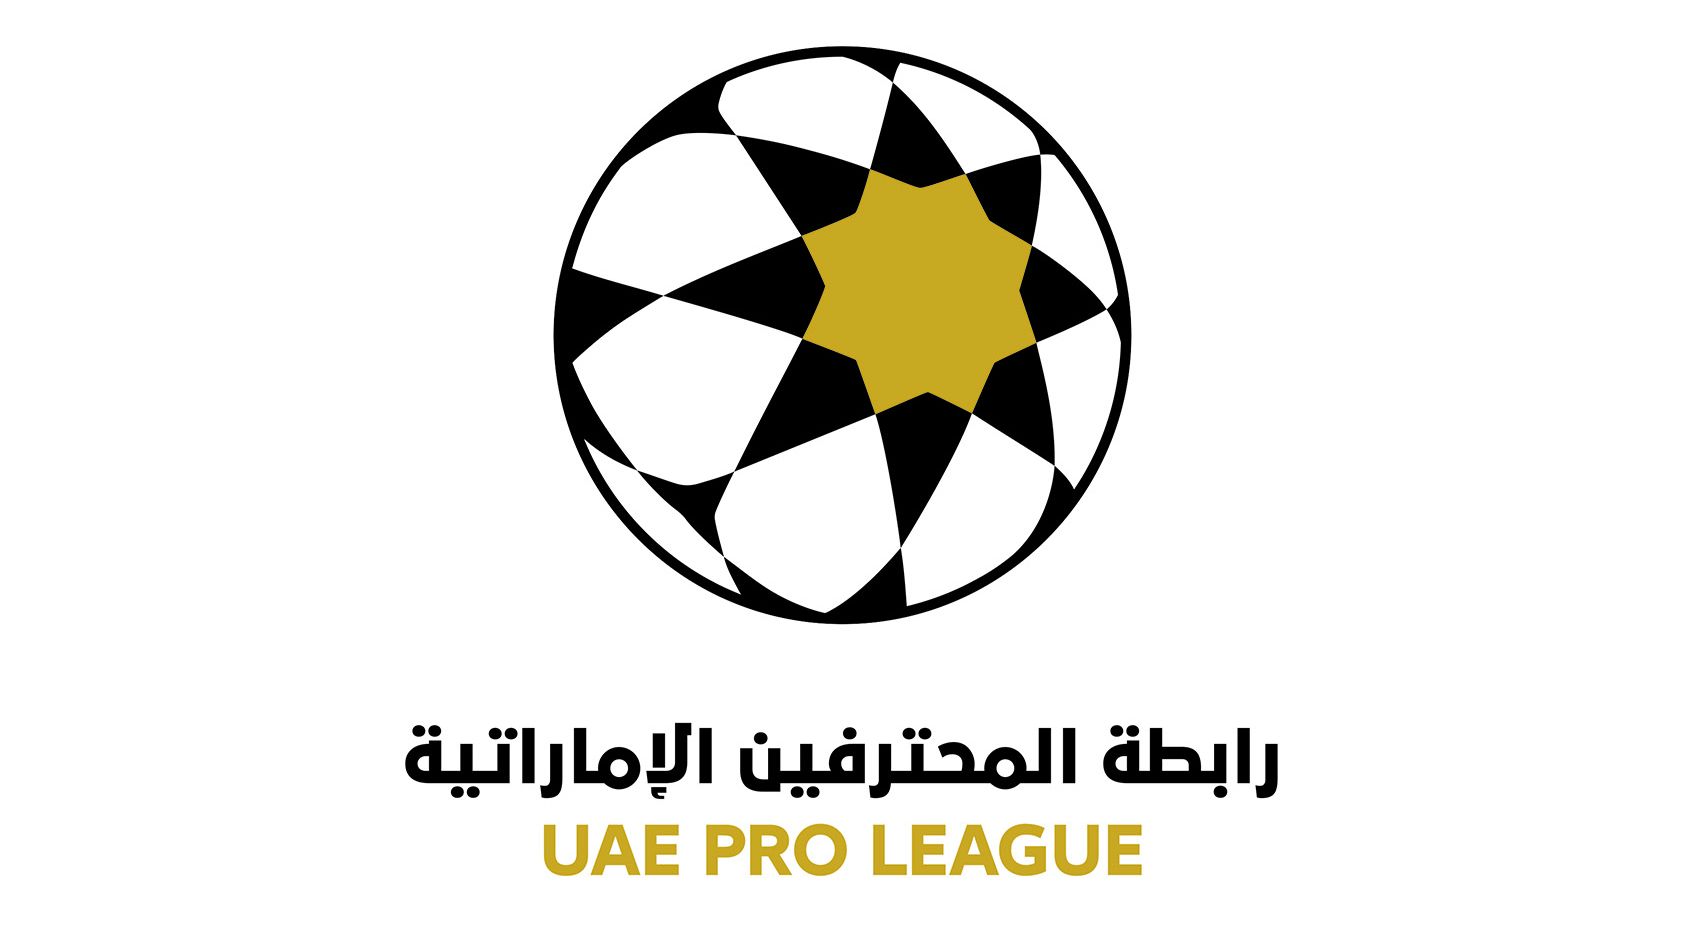 Pcr Test Result Valid Up Till 96 Hours For Uae Pro League